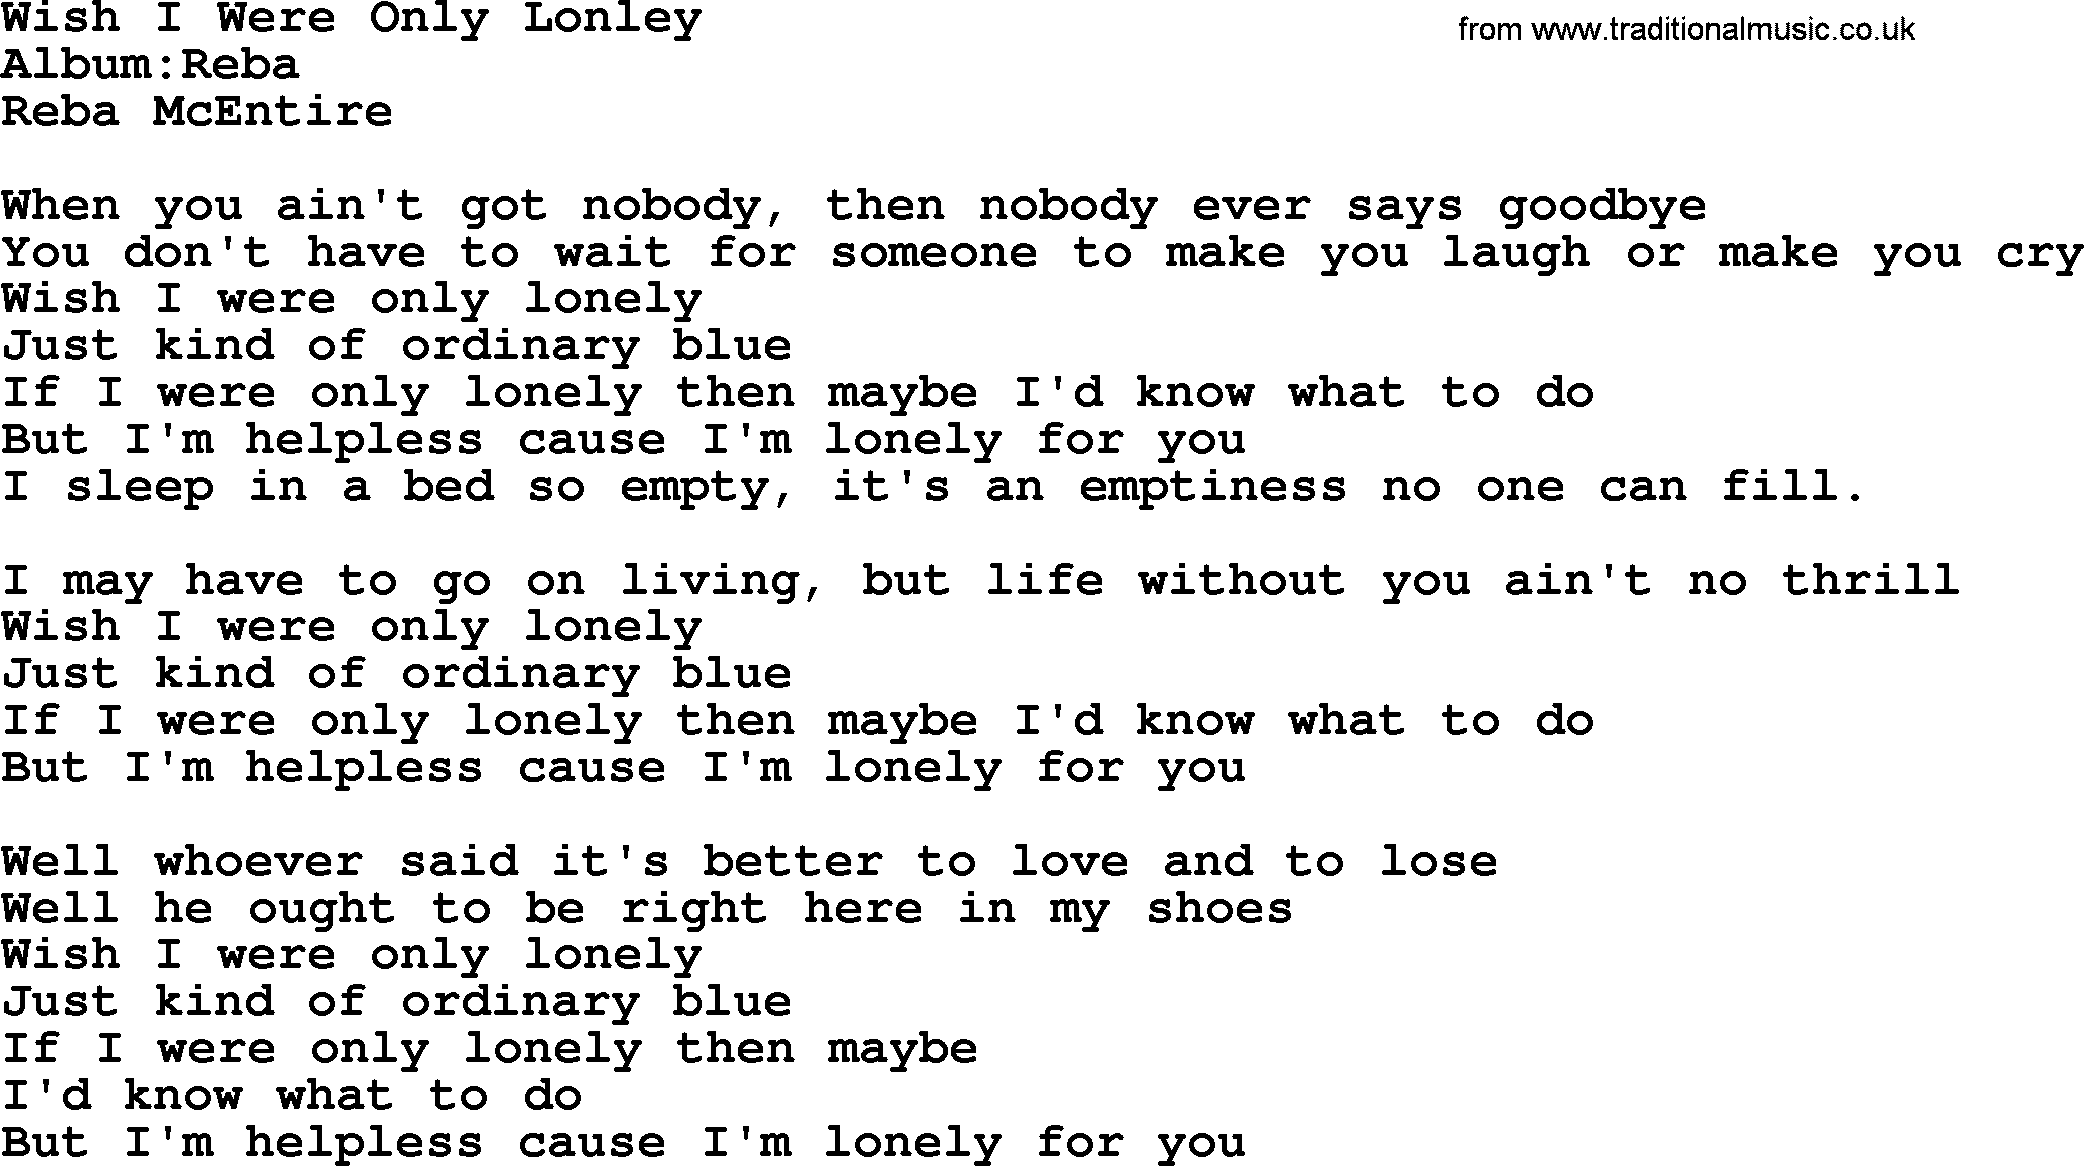 Reba McEntire song: Wish I Were Only Lonley lyrics